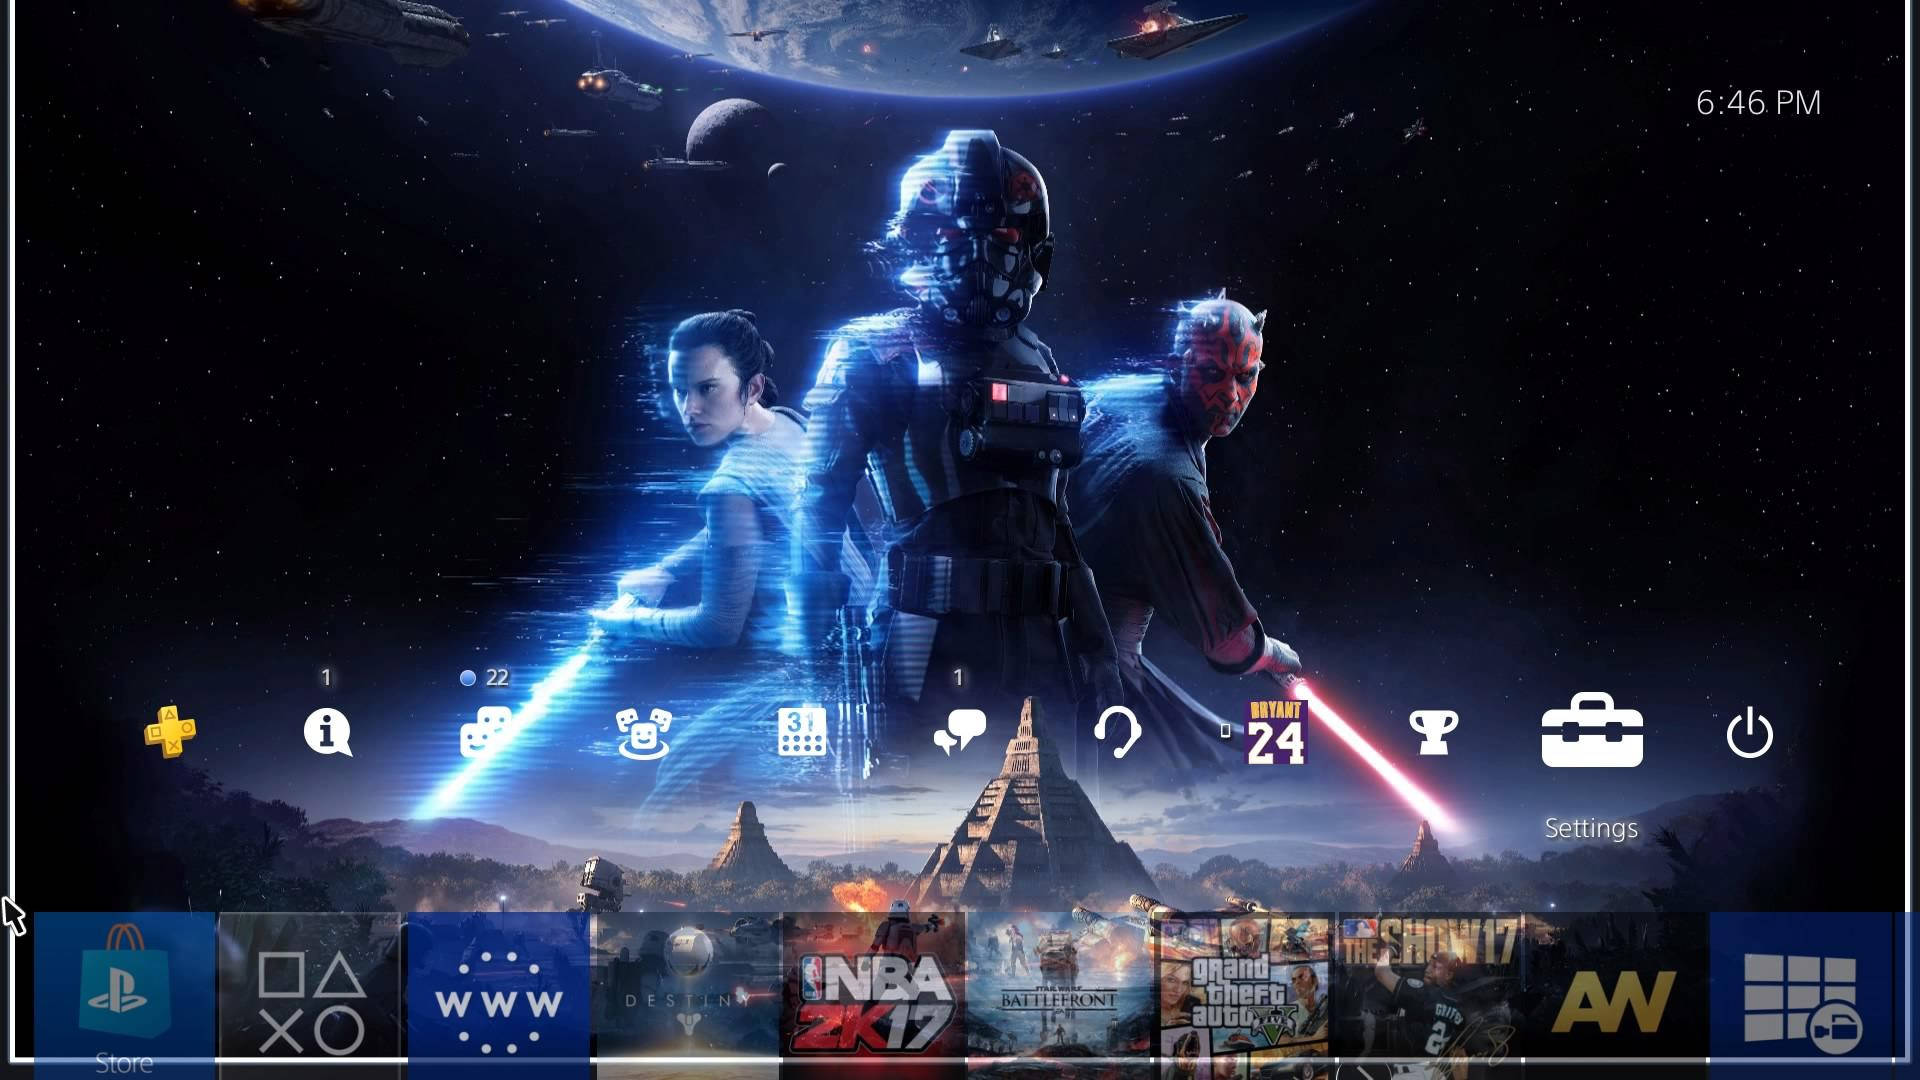 PS4 Star Wars: Battlefront II desktop wallpaper cover.